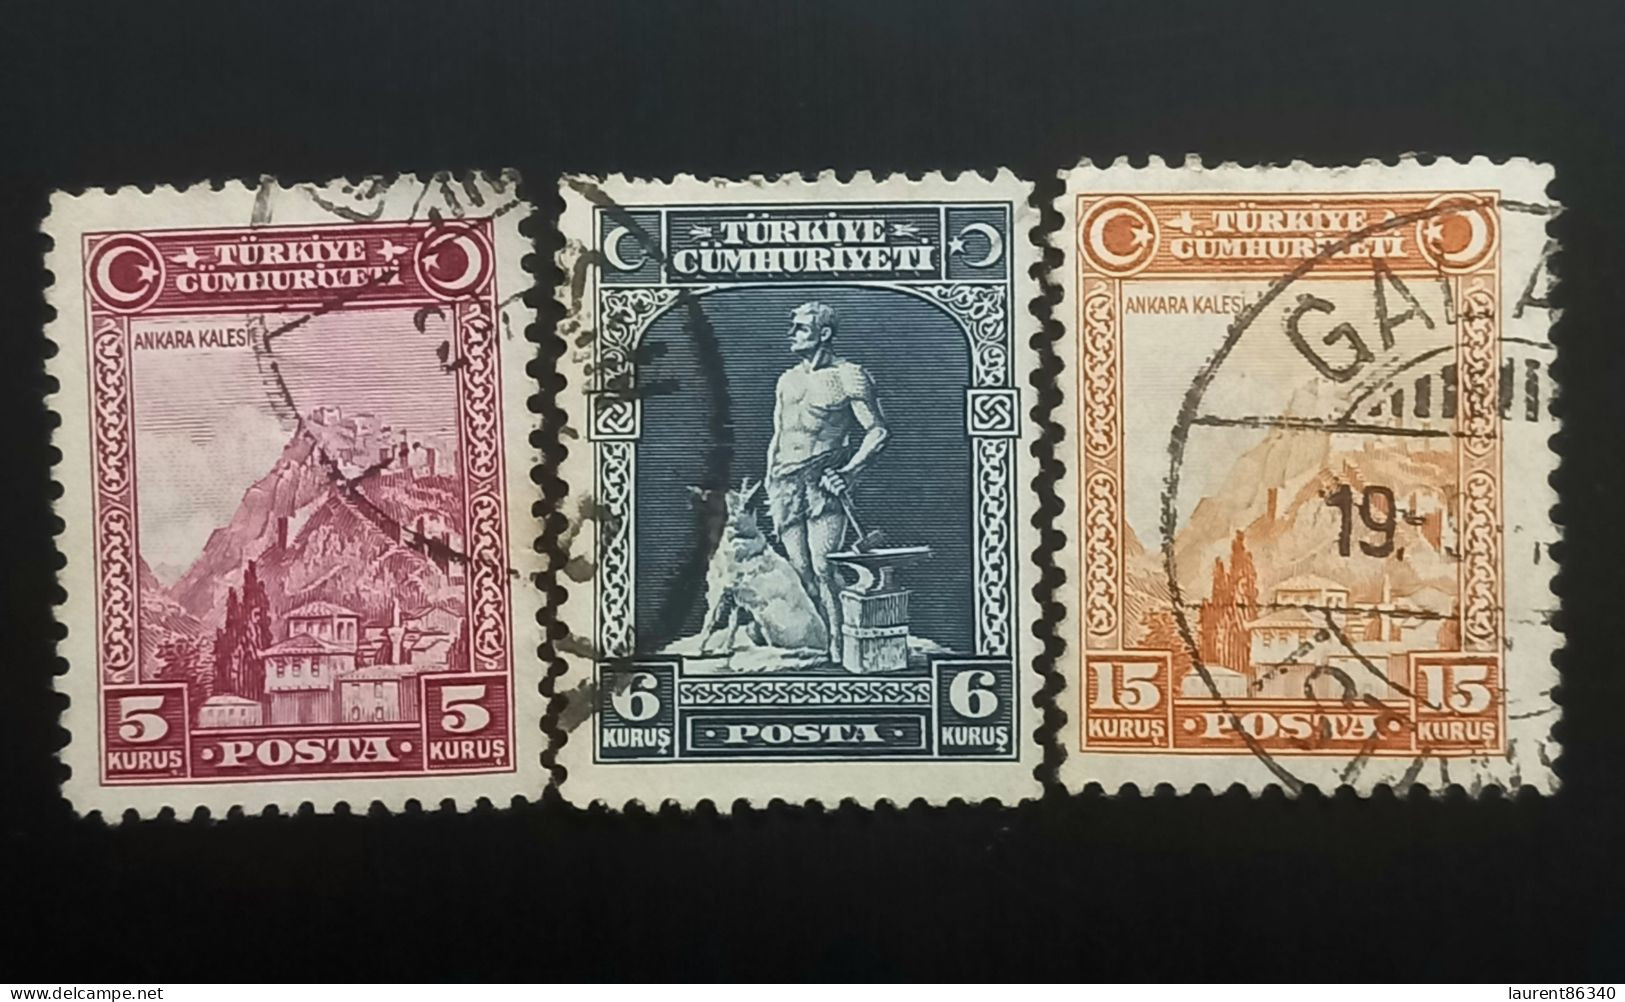 TURQUIE 1930 Inscription "TÜRKIYE CÜMHURIYETI" - "Ü" In "CÜMHURIYETI" 3 Used Stamps - Oblitérés